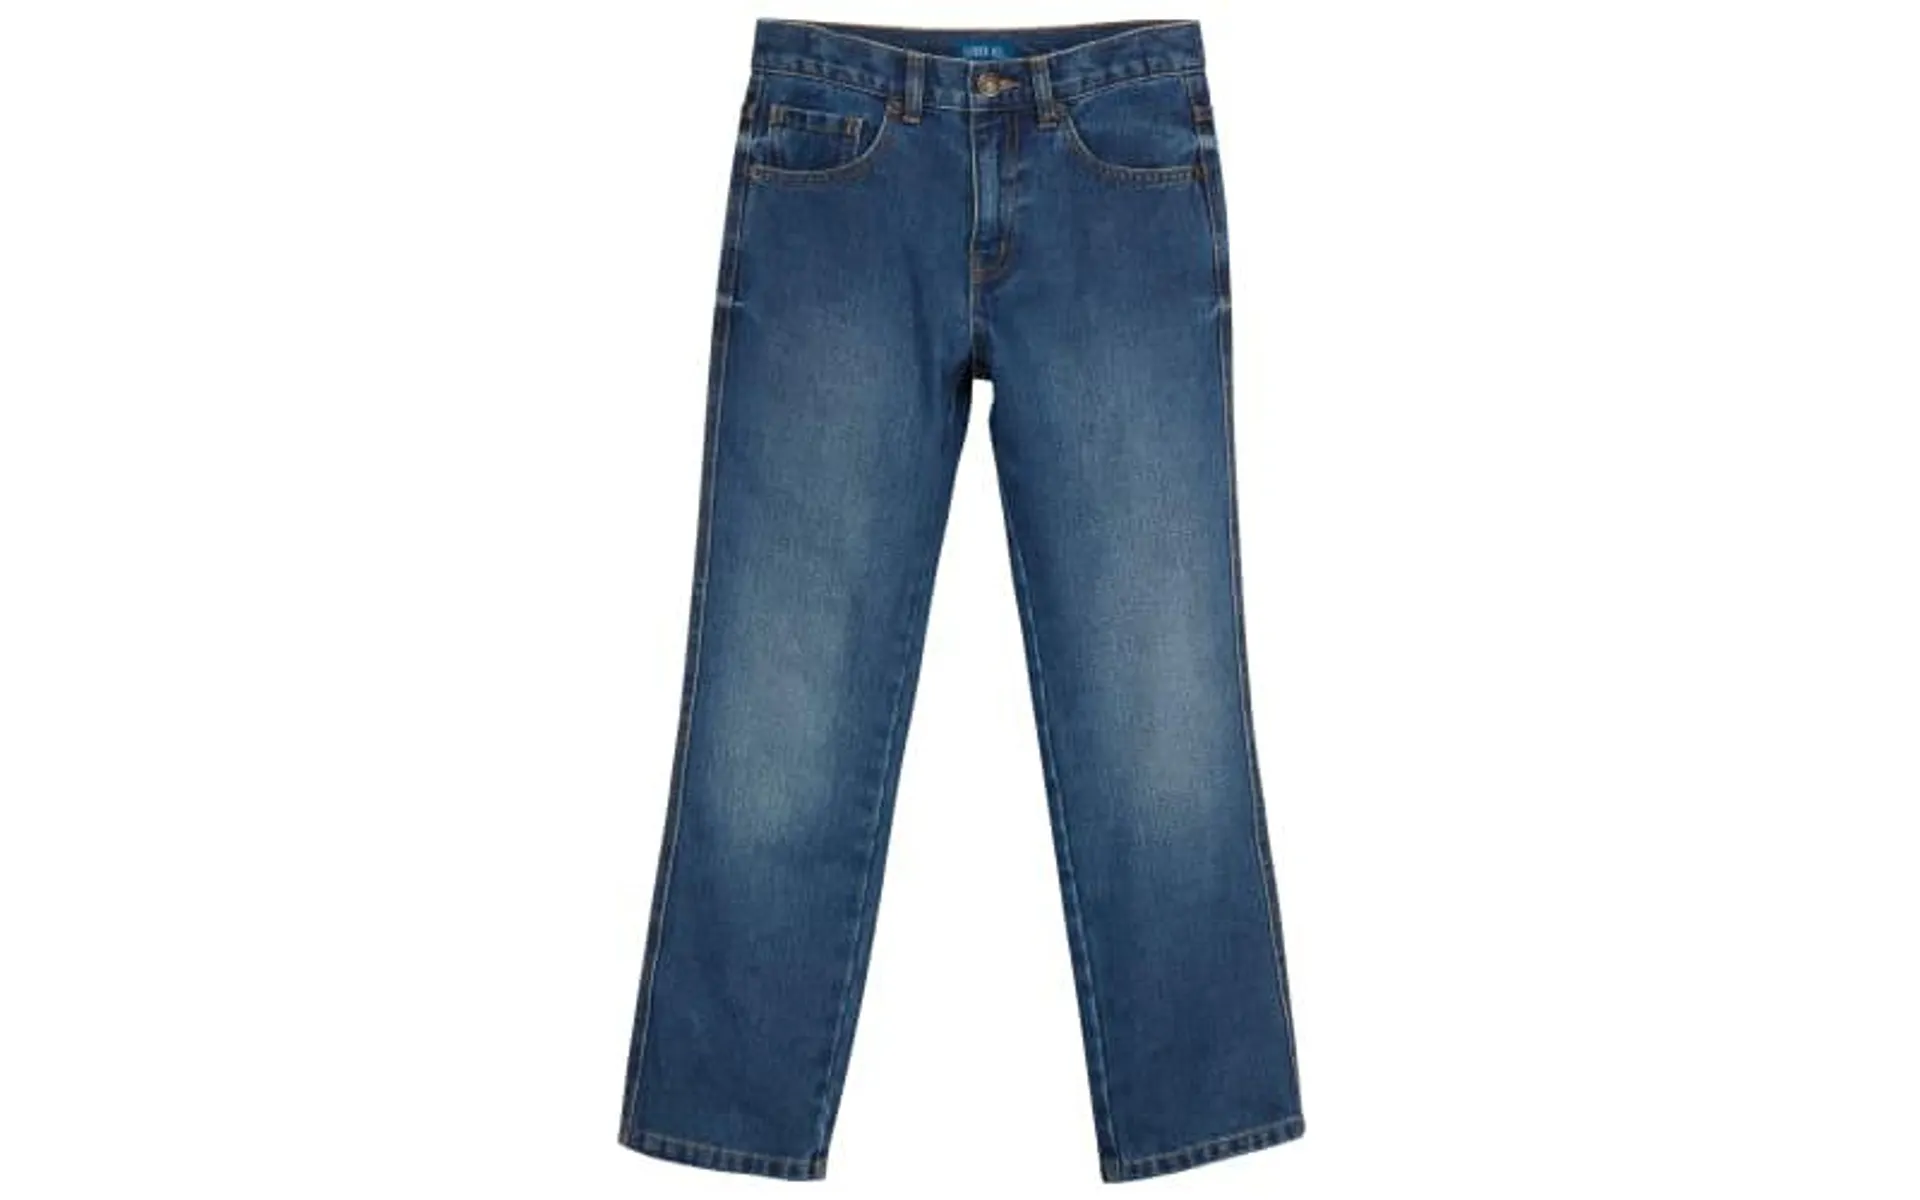 Outdoor Kids Denim Jeans for Boys